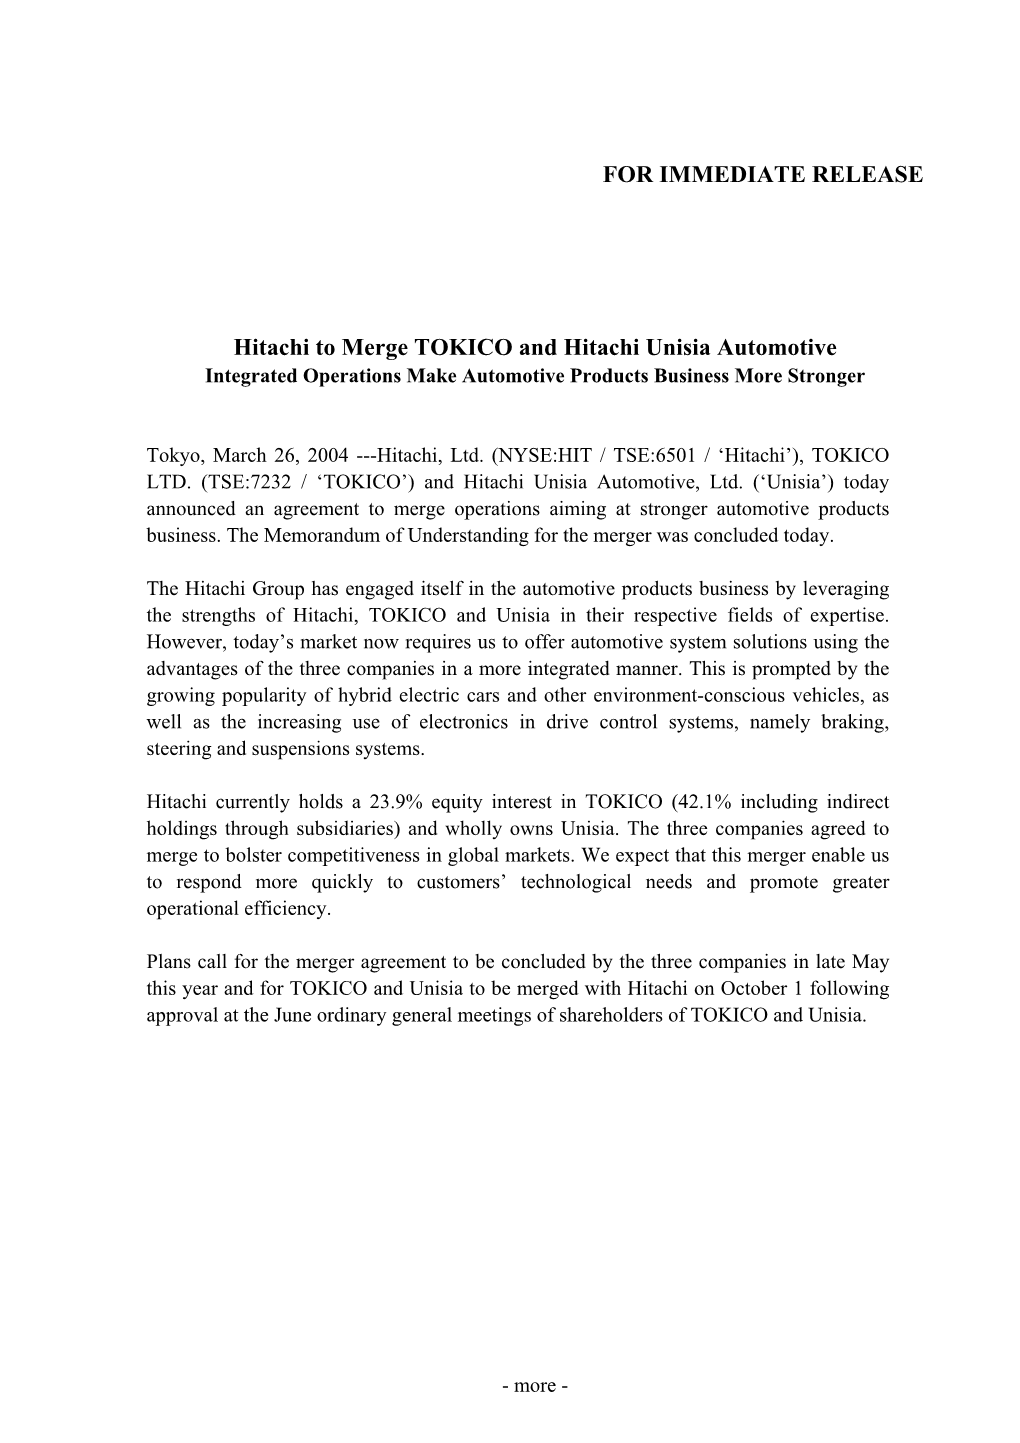 Hitachi to Merge TOKICO and Hitachi Unisia Automotive Integrated Operations Make Automotive Products Business More Stronger